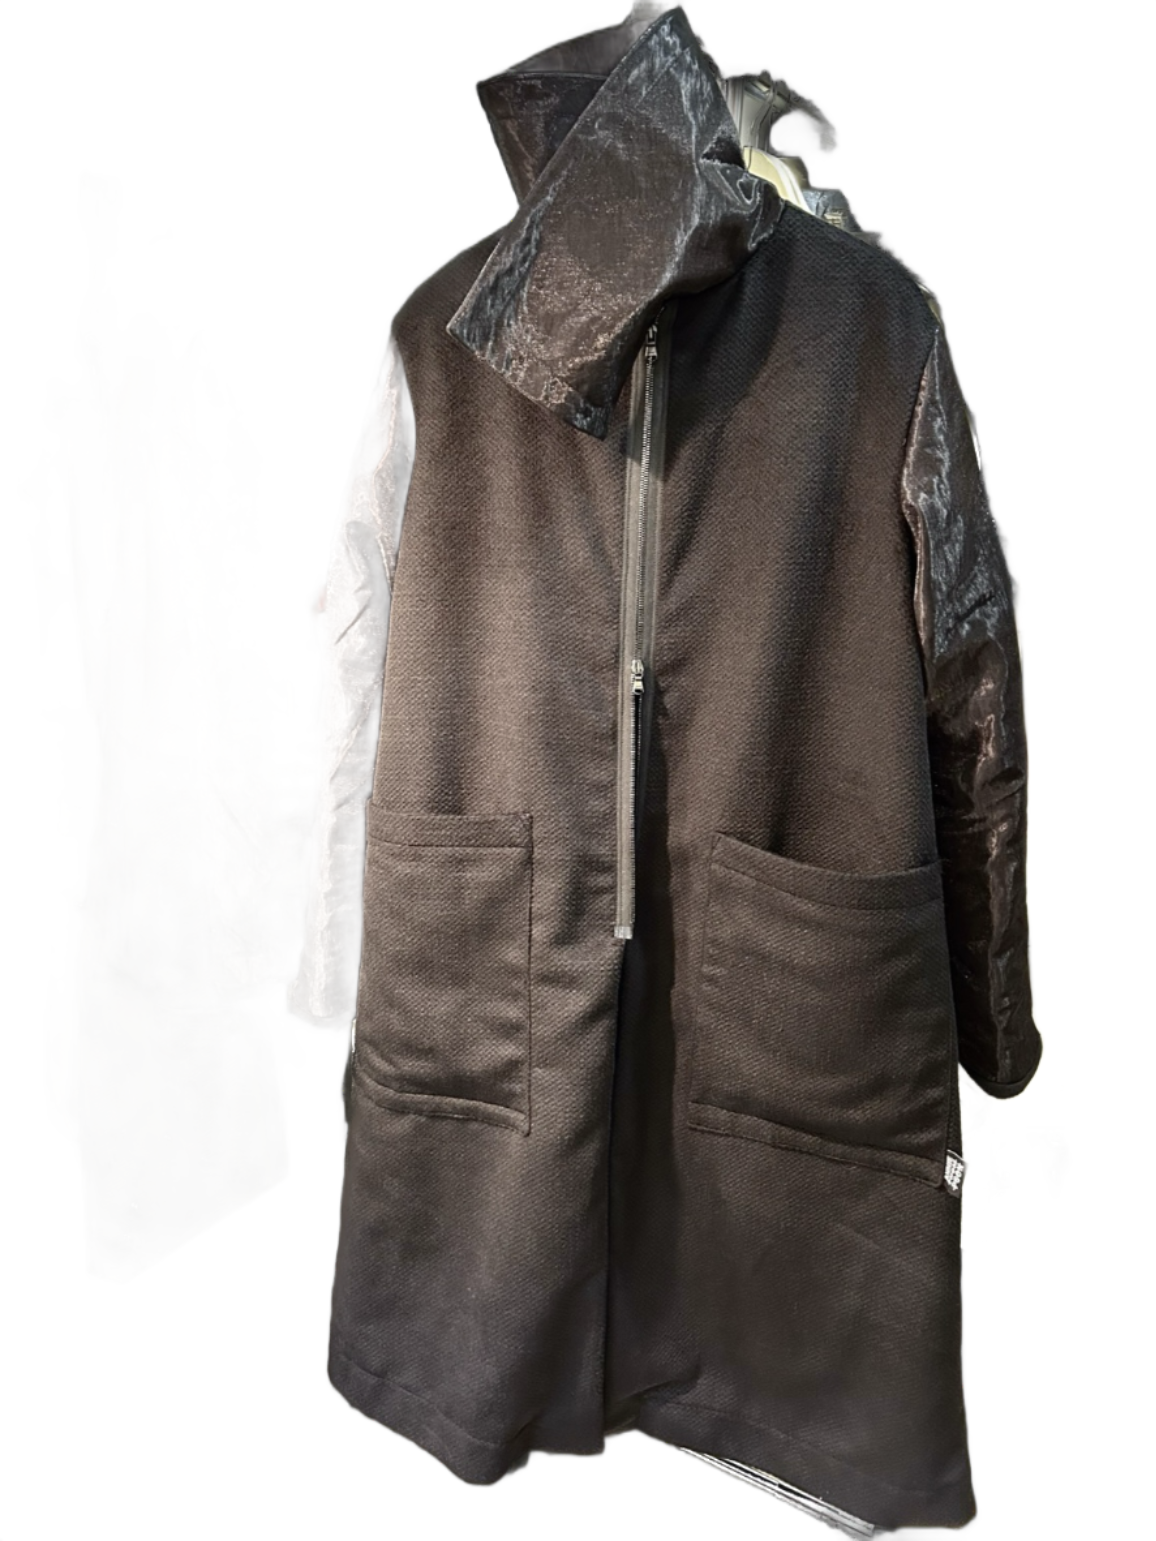 'The Detroit' wool cashmere winter coat